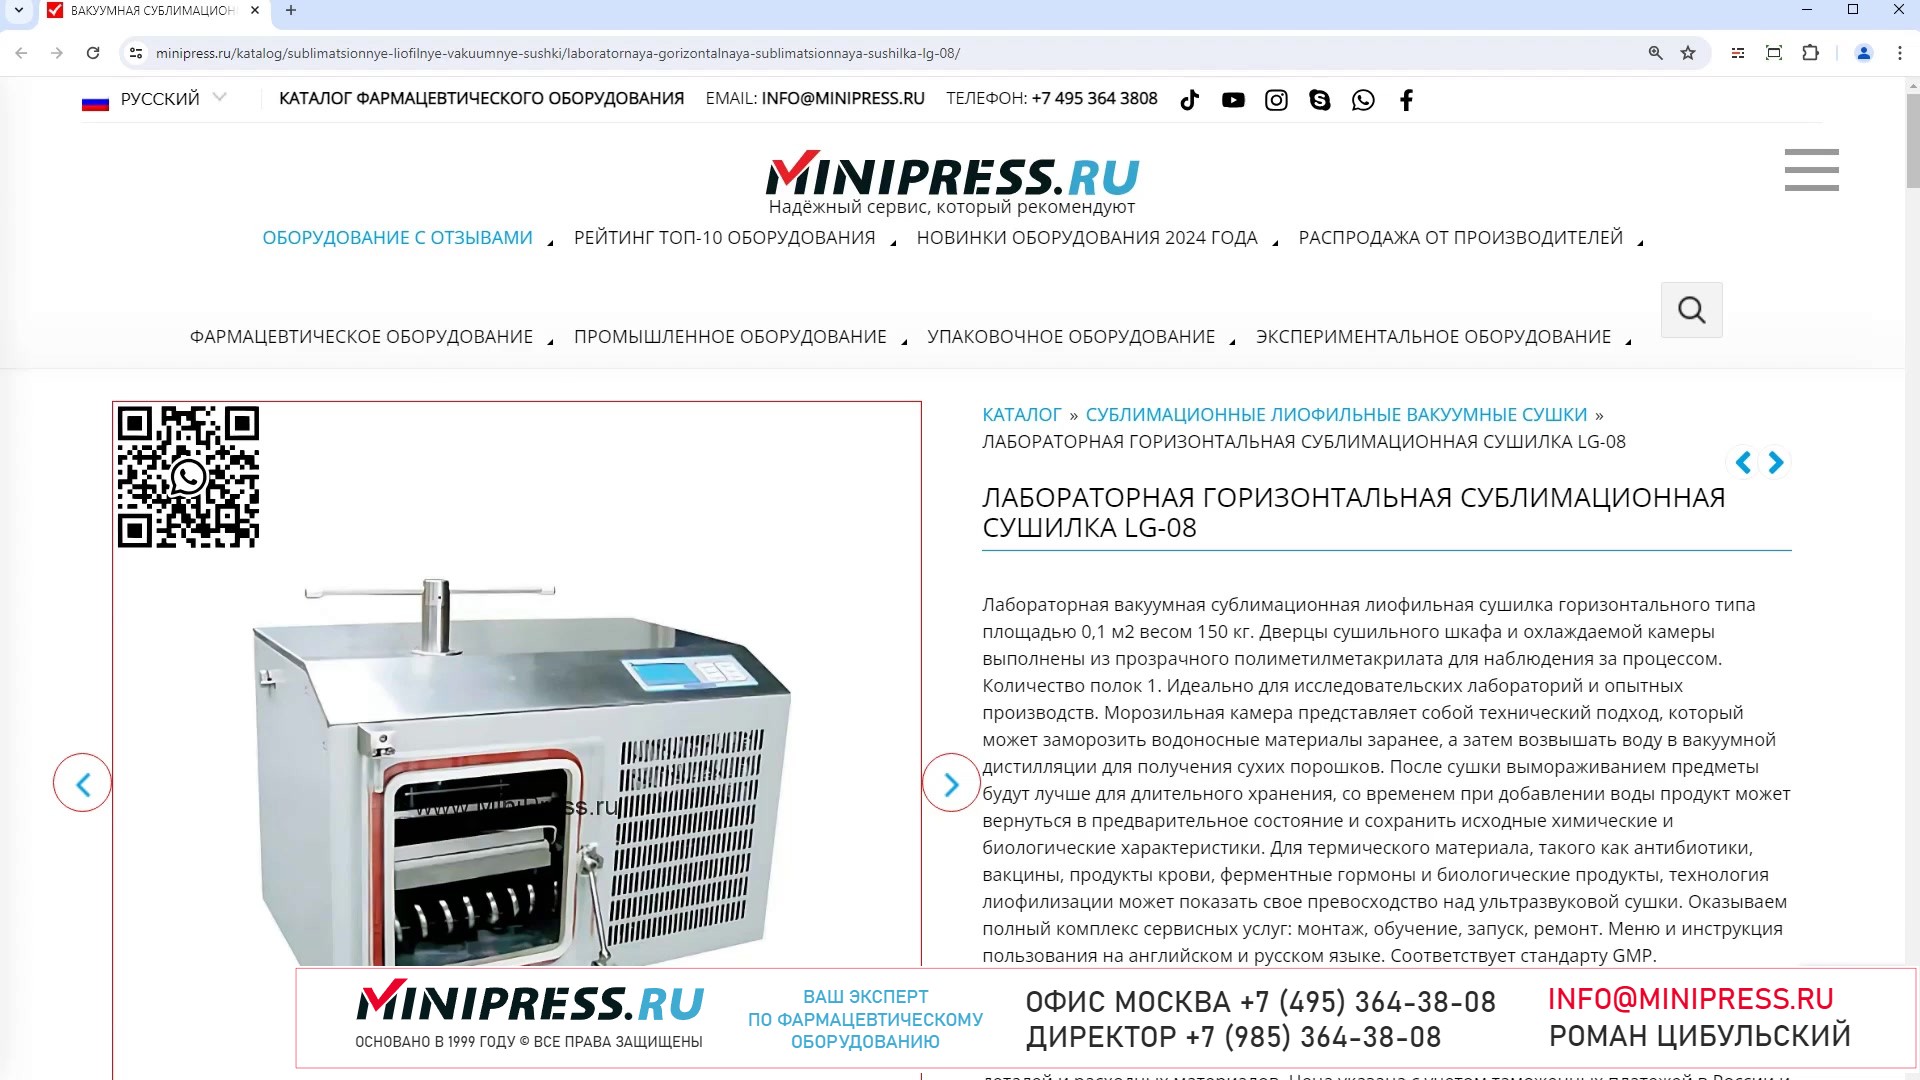 Minipress.ru Лабораторная горизонтальная сублимационная сушилка LG-08